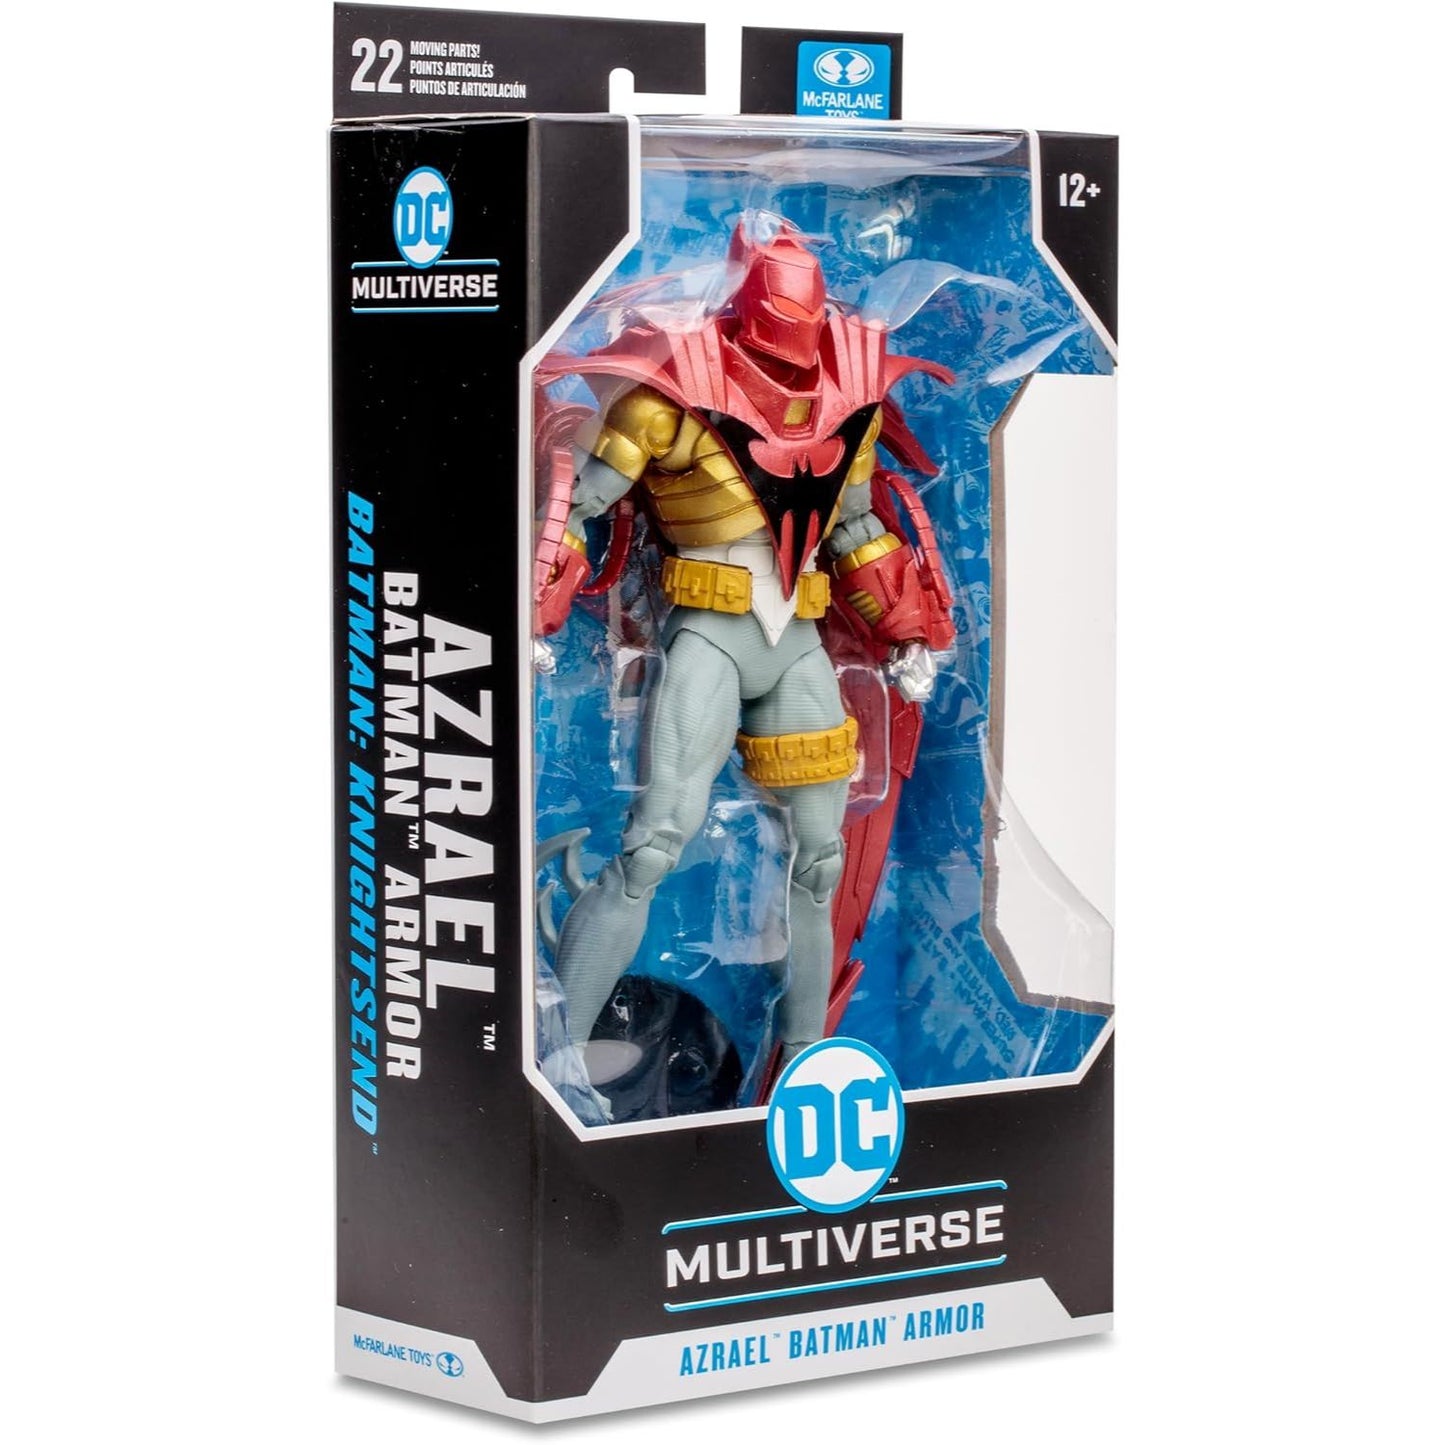 DC Multiverse Azrael Batman Armor (Batman: Knightsend) 7in Action Figure